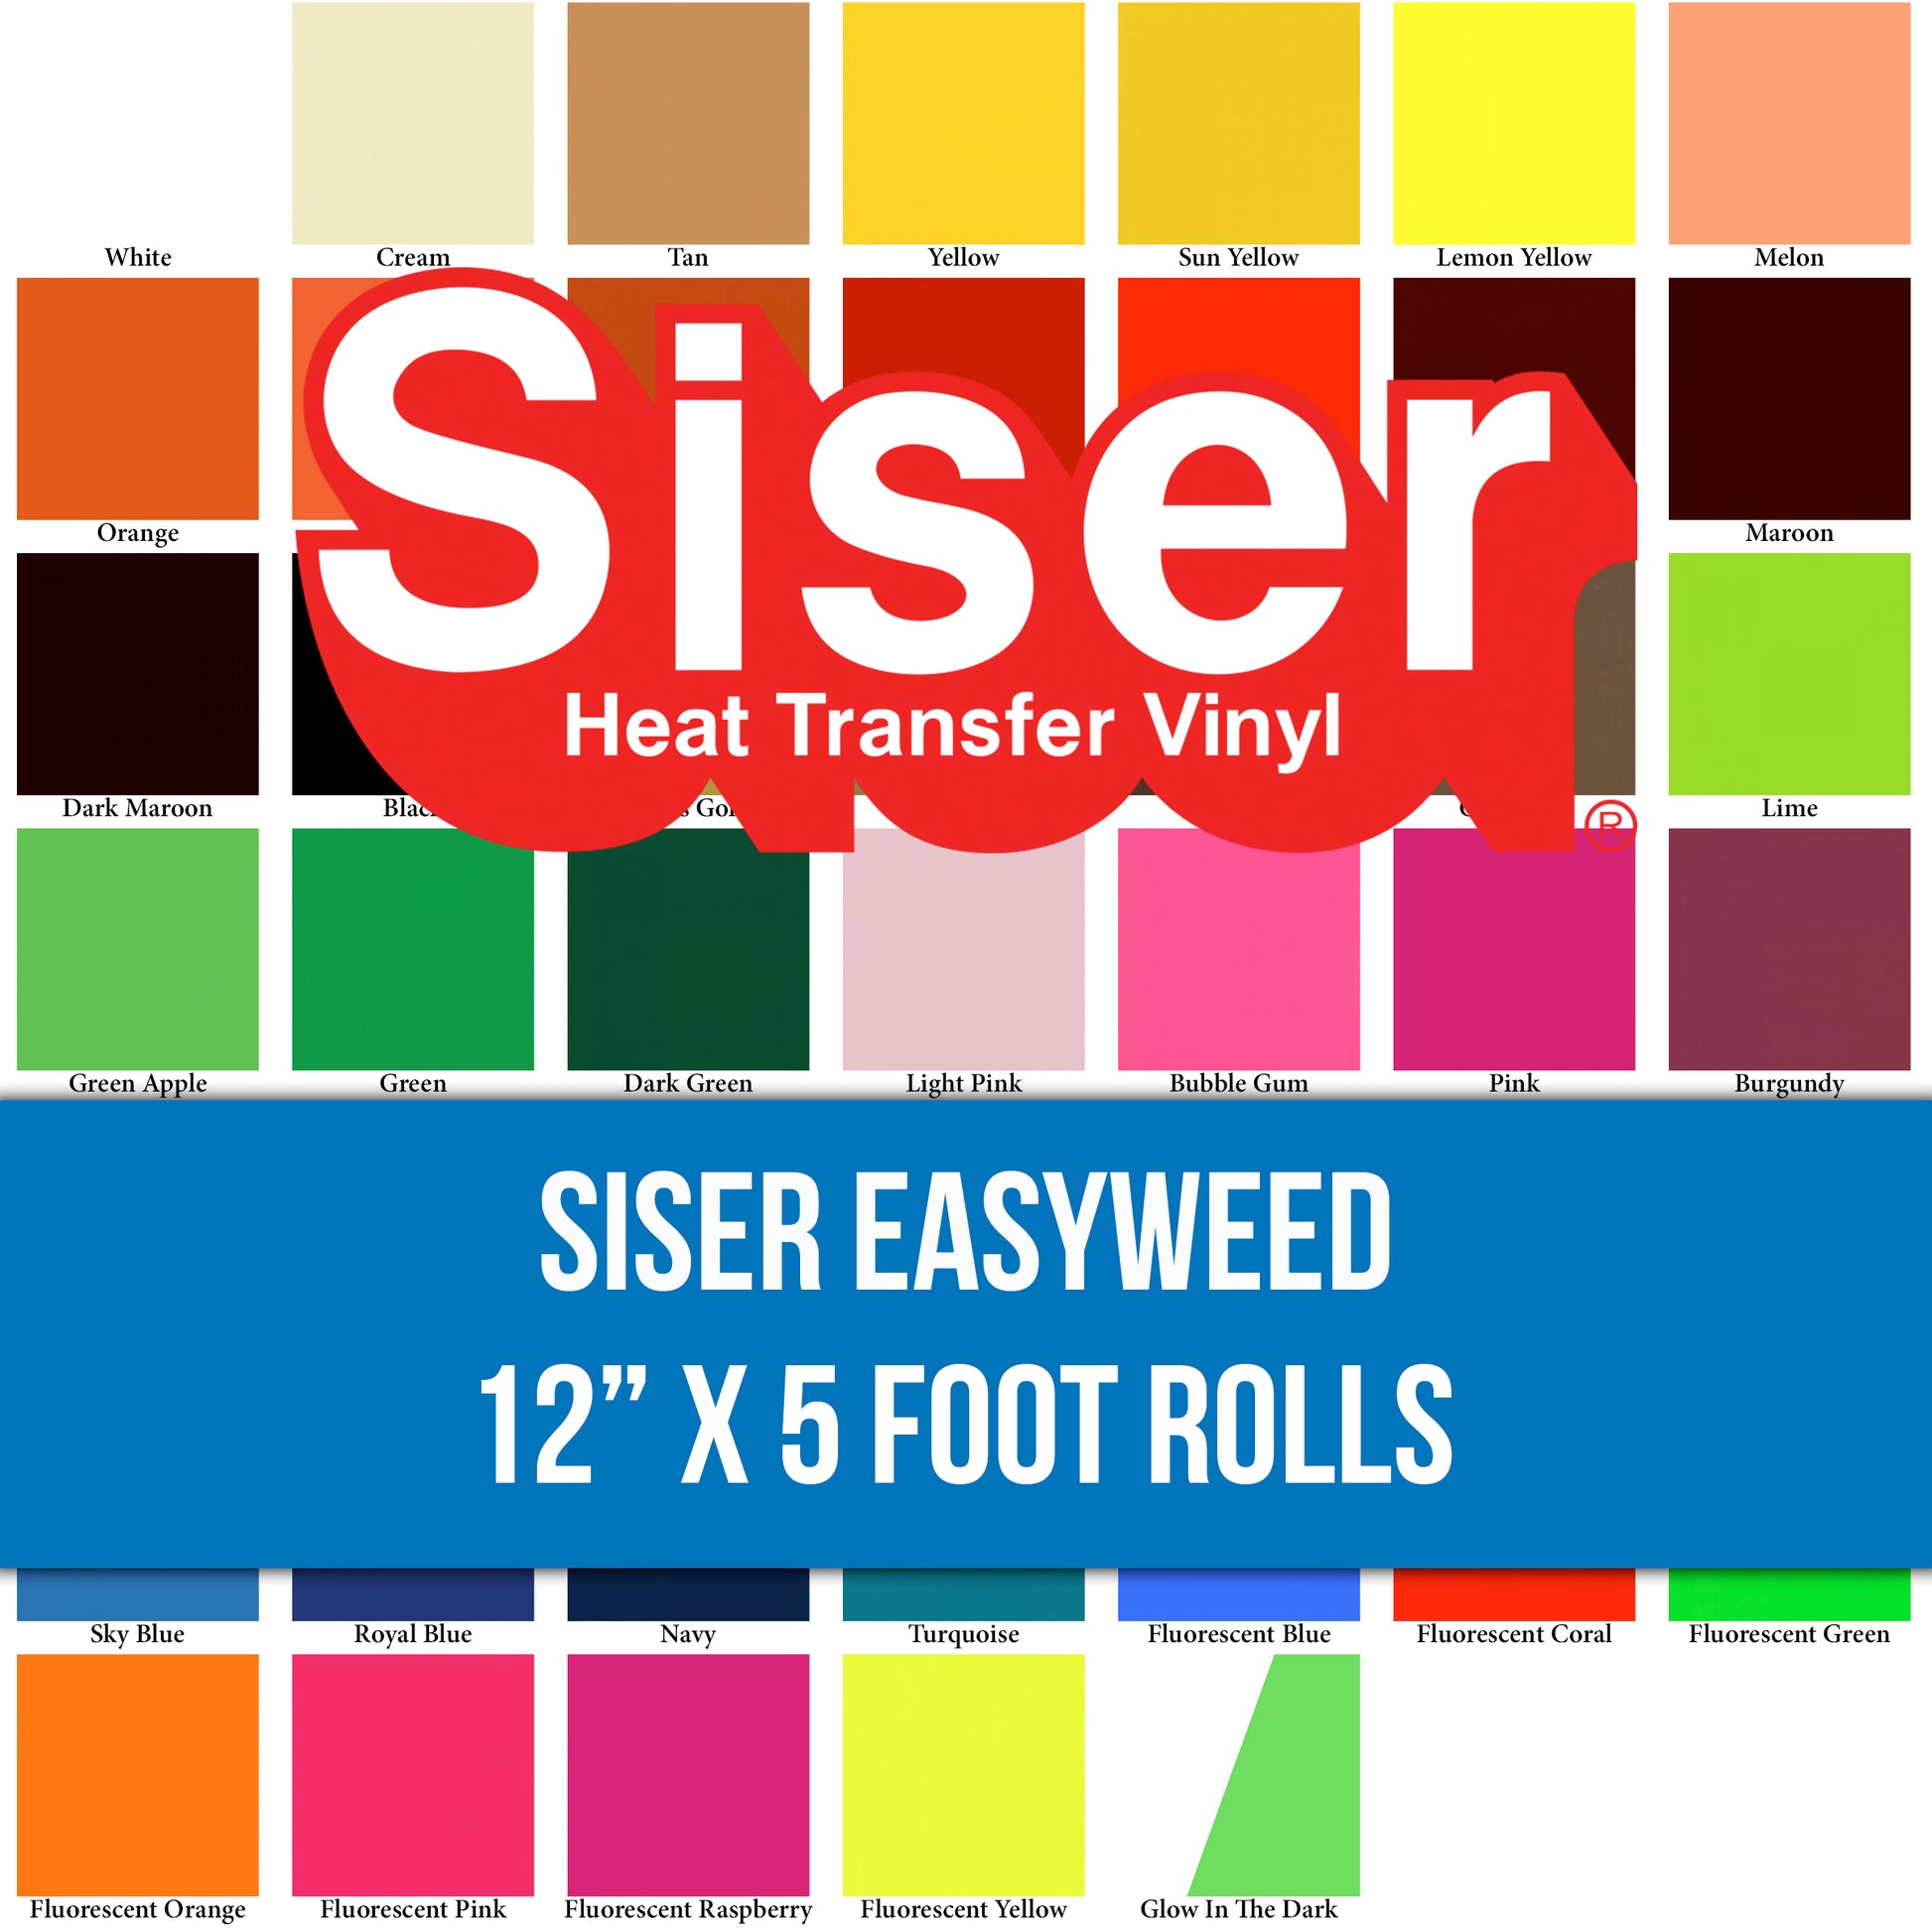 12 X 5 YD / Siser Easyweed Heat Transfer Vinyl / Roll / Siser Easyweed HTV  Roll / Heat Transfer Vinyl / 12 / 5 Yards / Cricut Iron On 